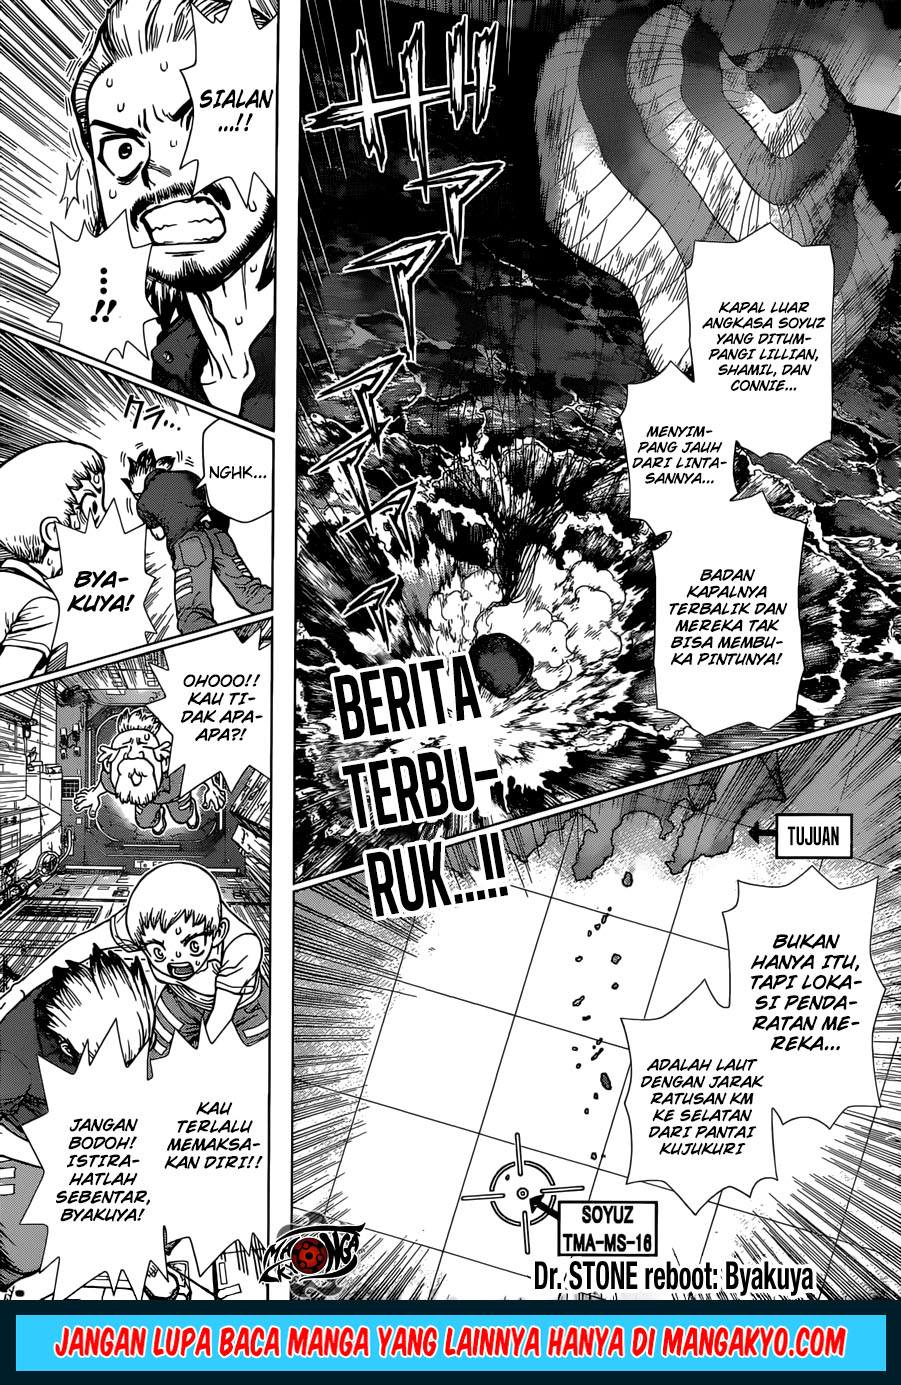 Dr. Stone Reboot: Byakuya: Chapter 4 - Page 1